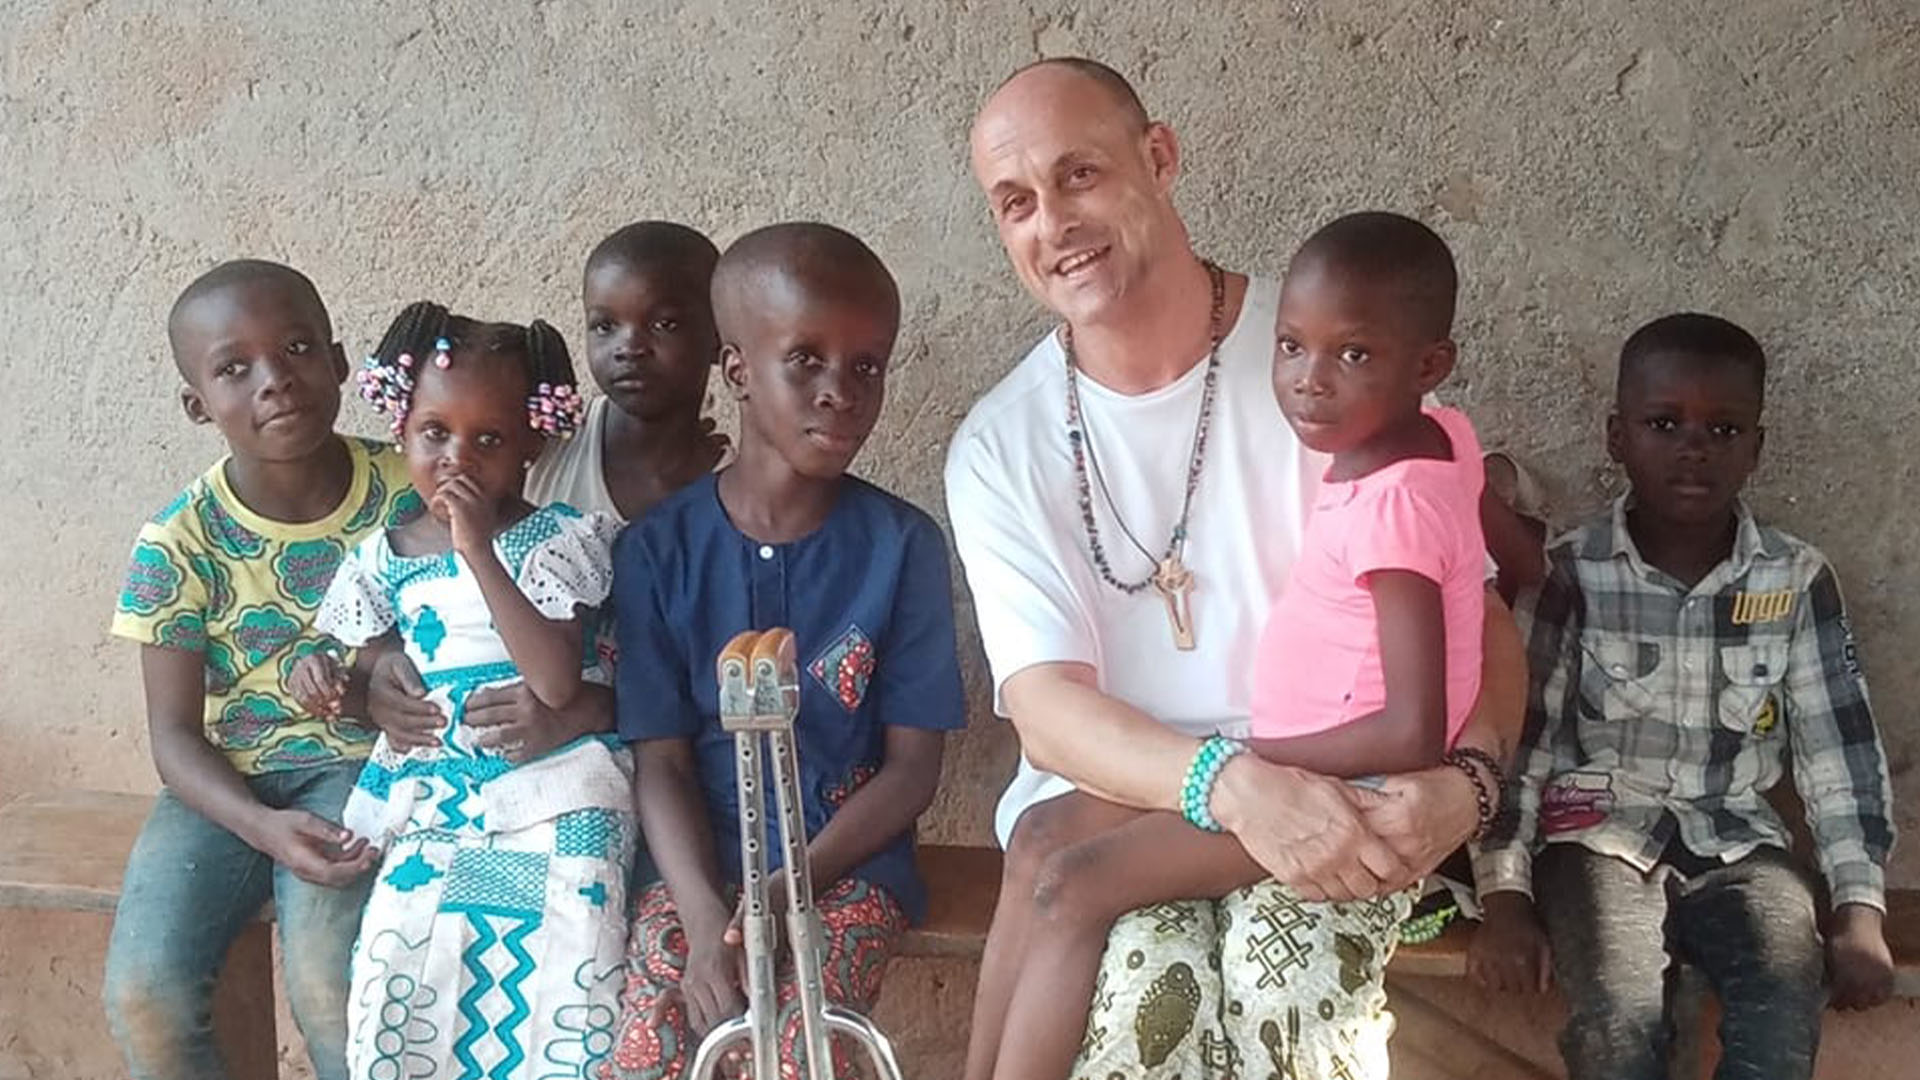 Walter, missionario laico in Costa d'Avorio